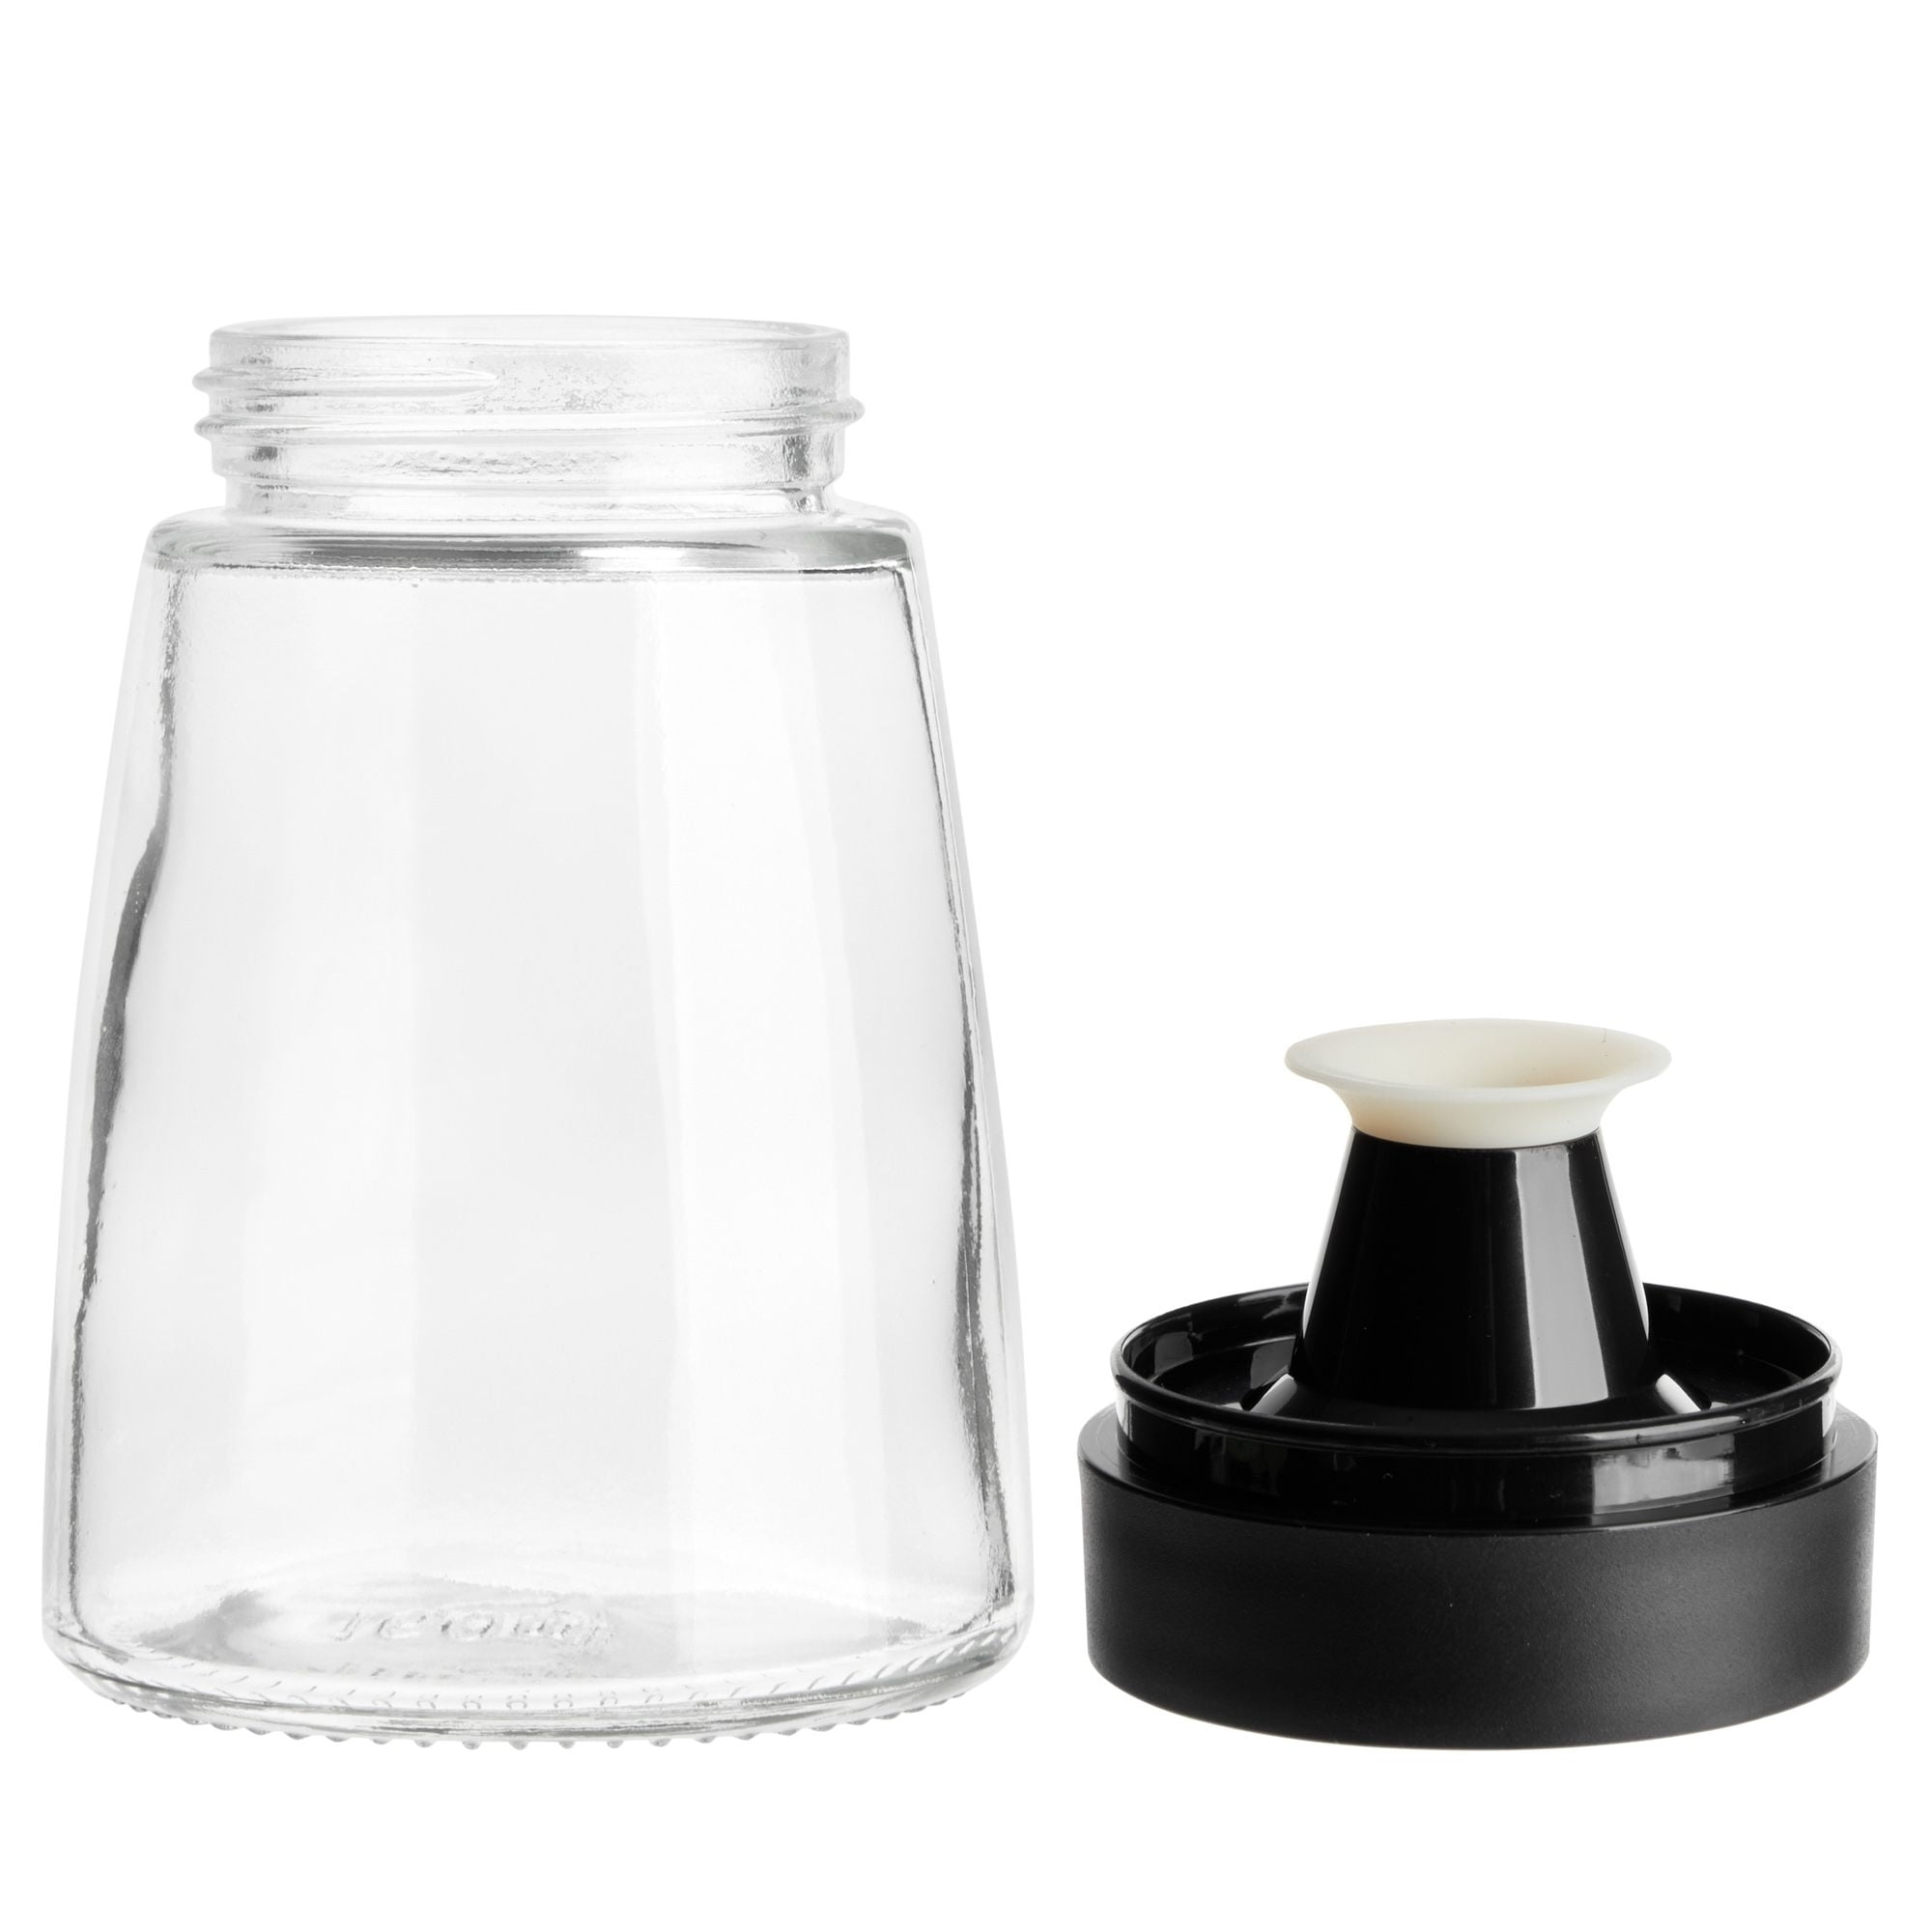 5Five Simply Smart vinegar and oil set with 2 dispenser bottles